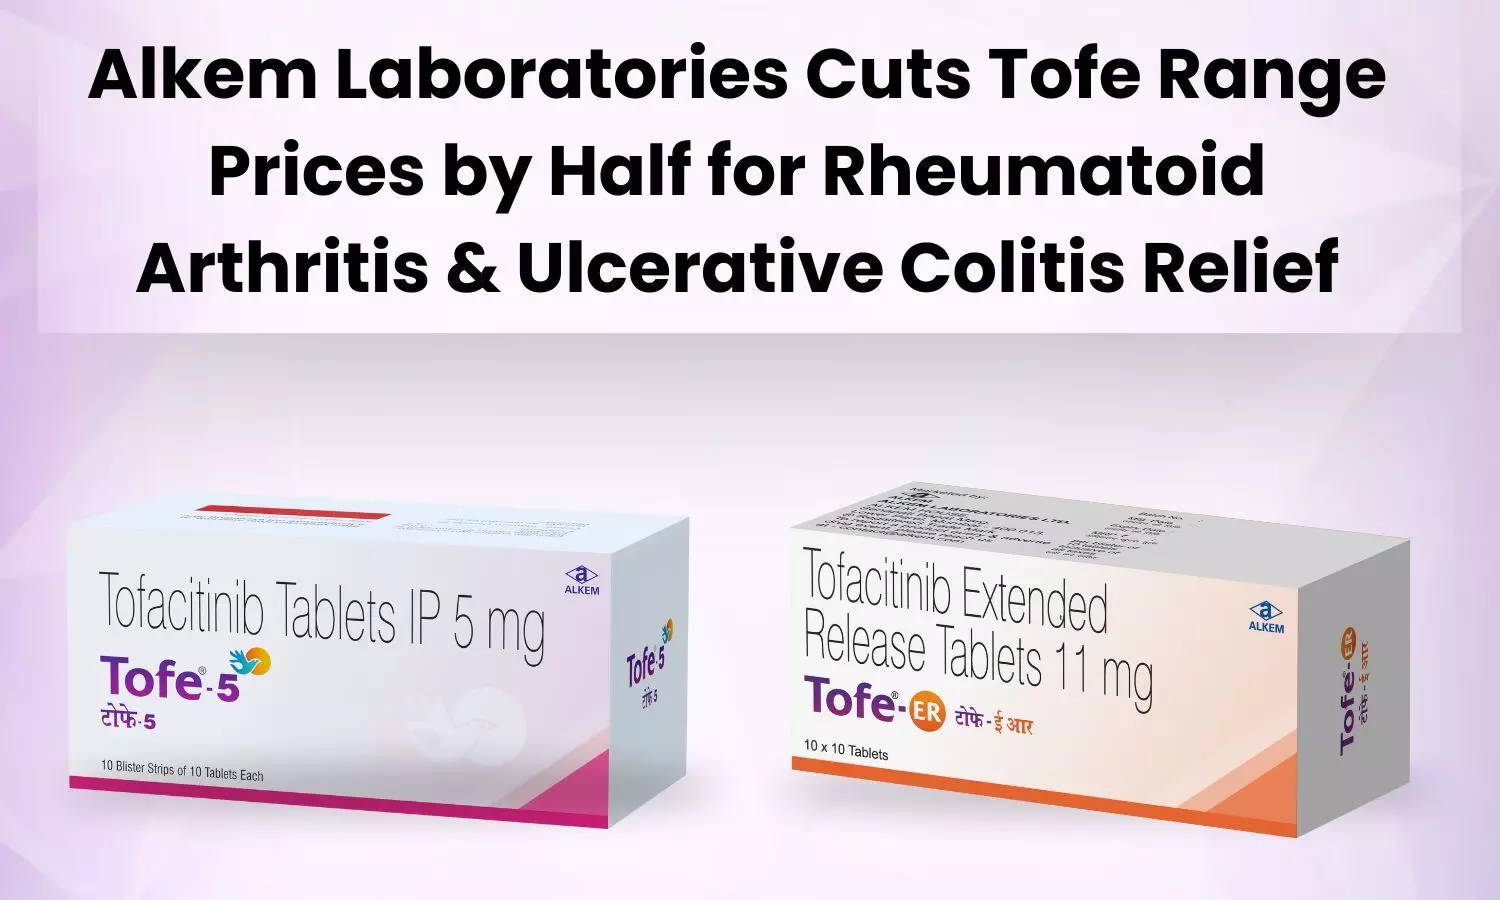 Alkem Laboratories Cuts Tofe Range Prices by Half for Rheumatoid Arthritis & Ulcerative Colitis Relief